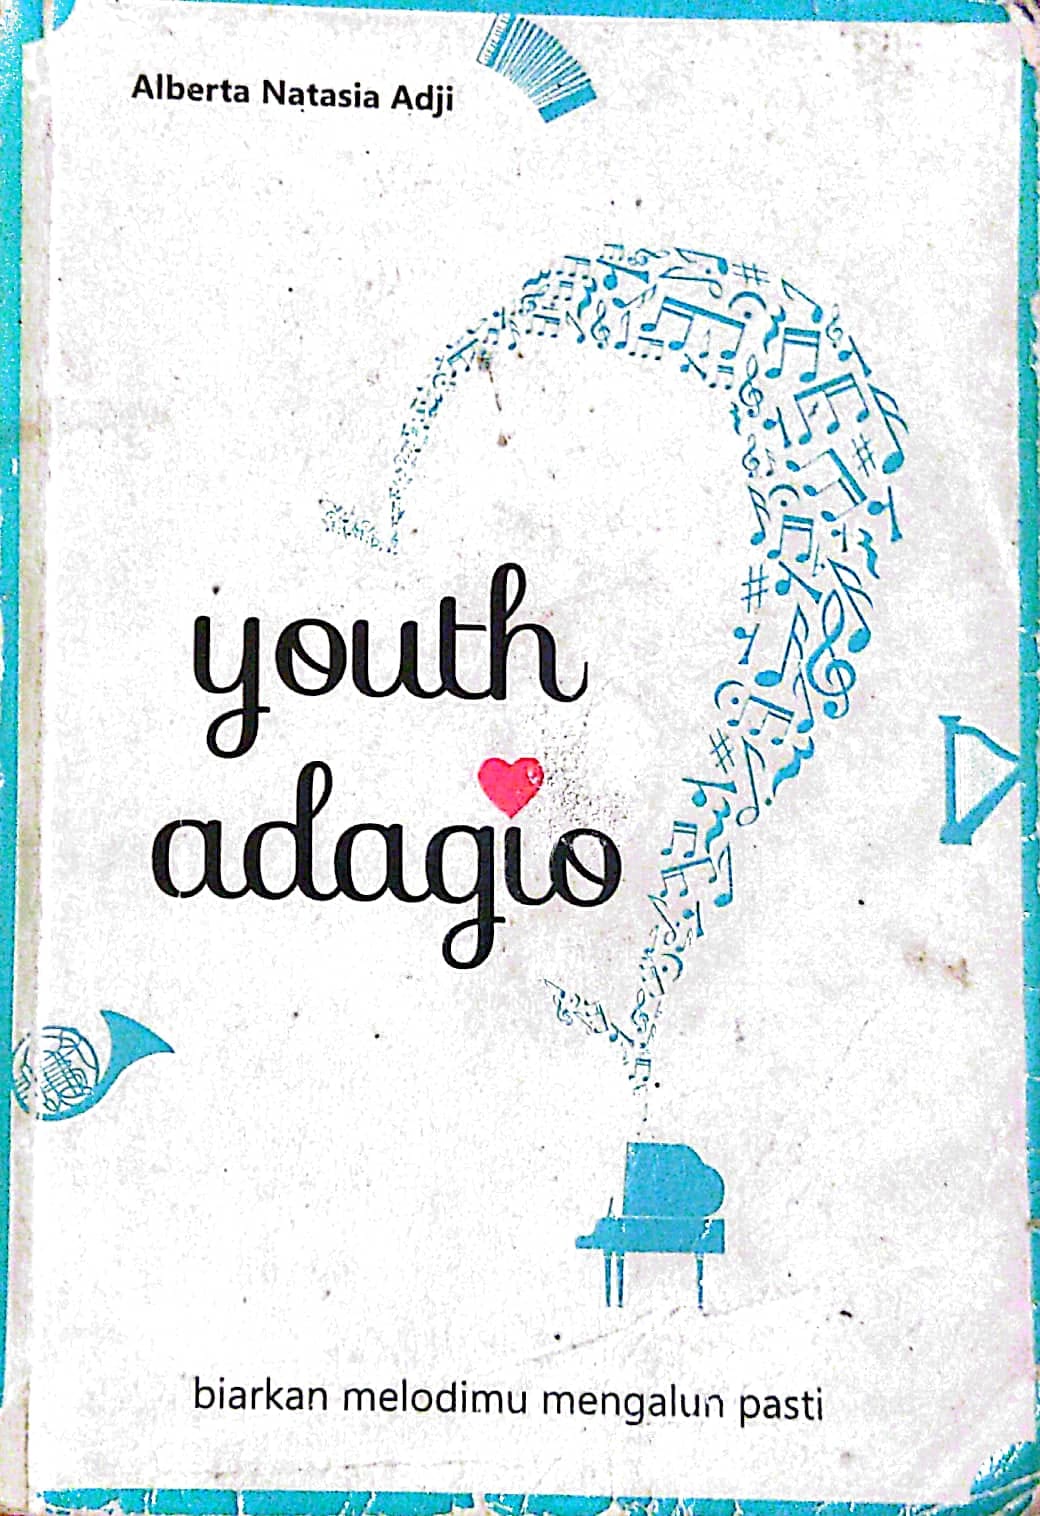 Youth adagio